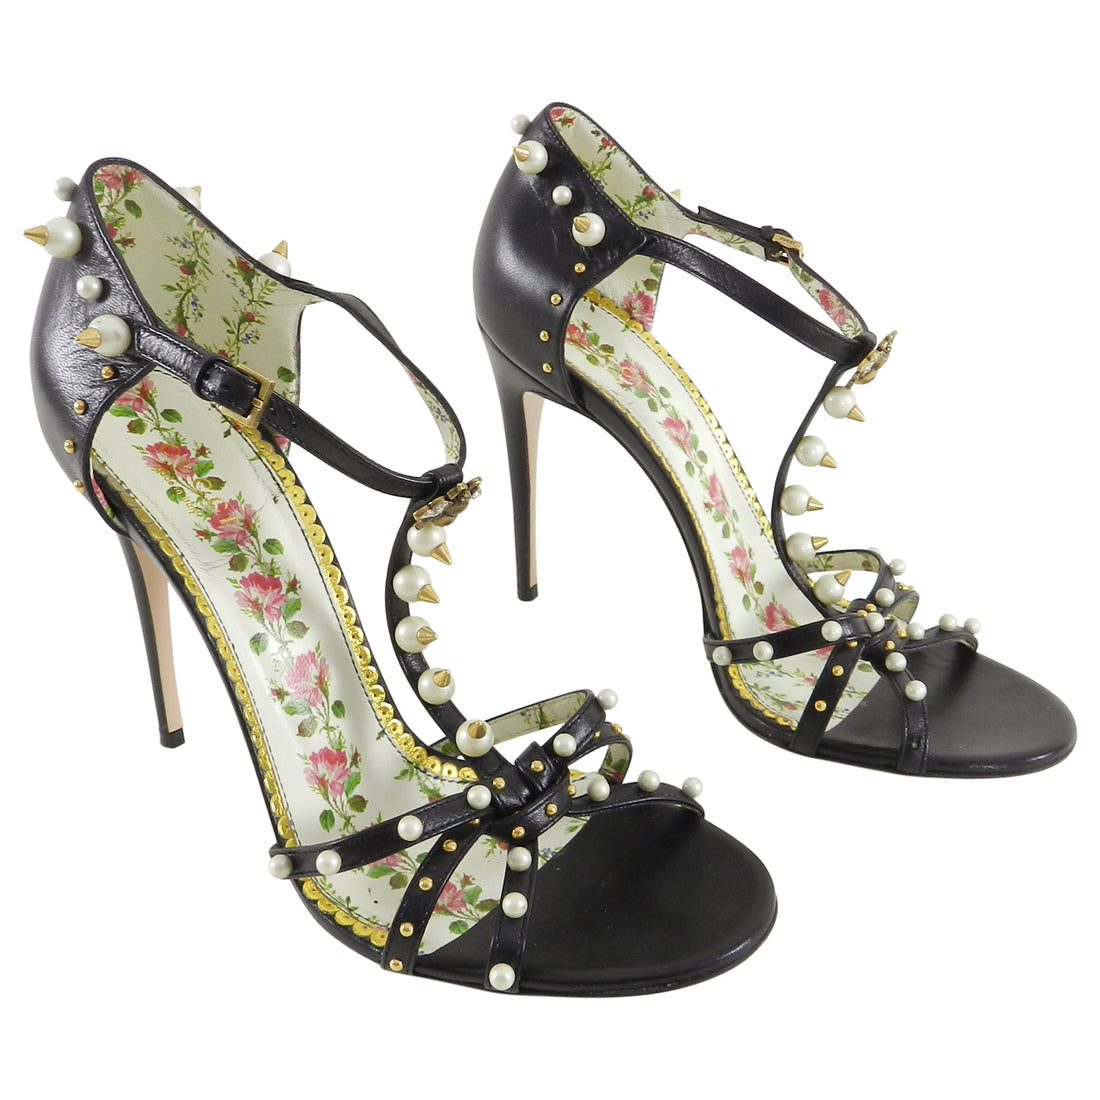 Miss Lola | All For Love Black Heart Embellished High Heels | Heels, Cute  black heels, Girly shoes